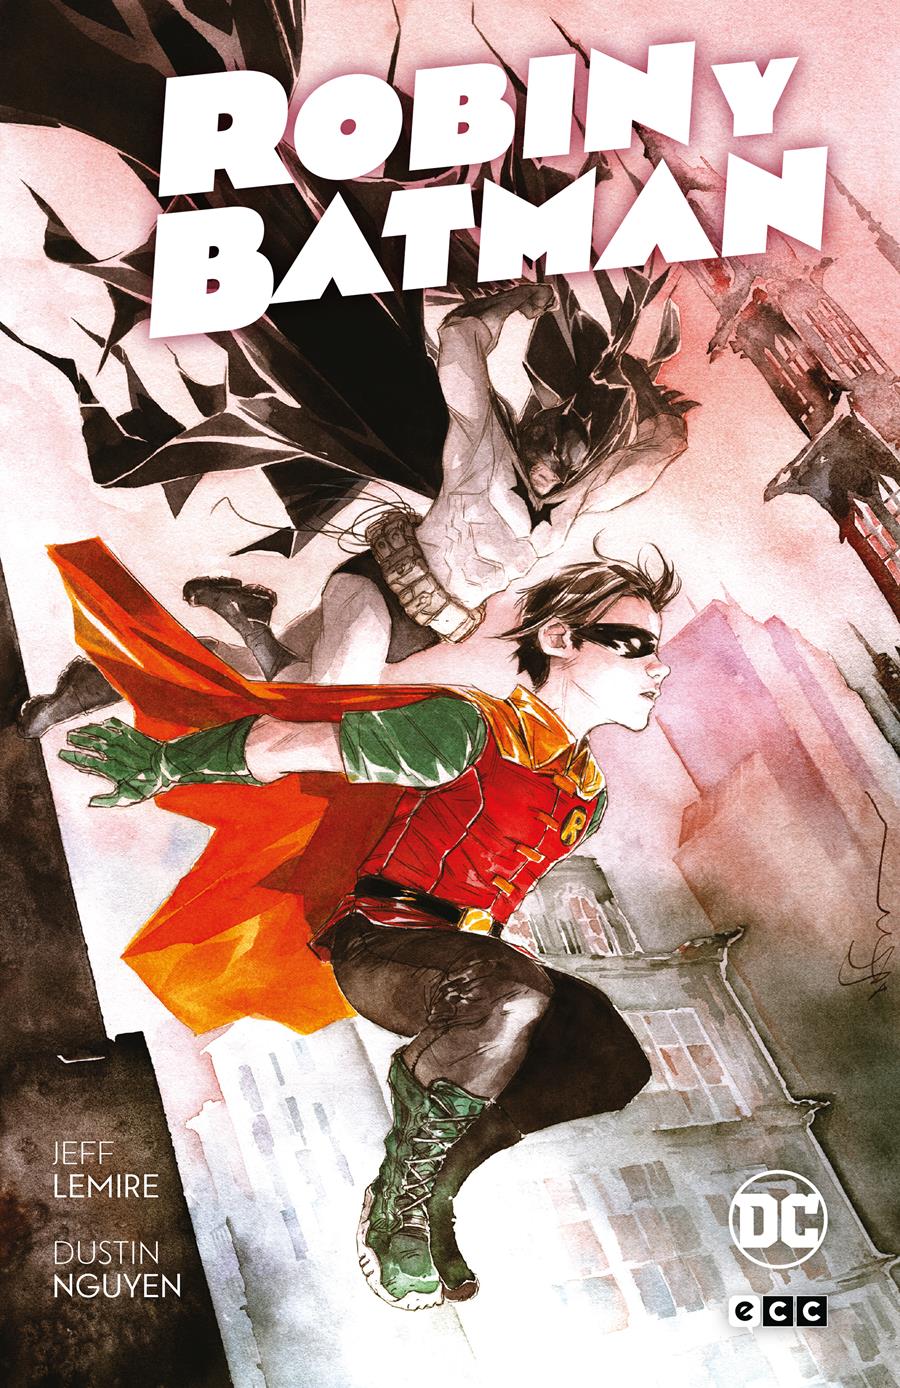 Robin y Batman | N0722-ECC25 | Dustin Nguyen / Jeff Lemire | Terra de Còmic - Tu tienda de cómics online especializada en cómics, manga y merchandising